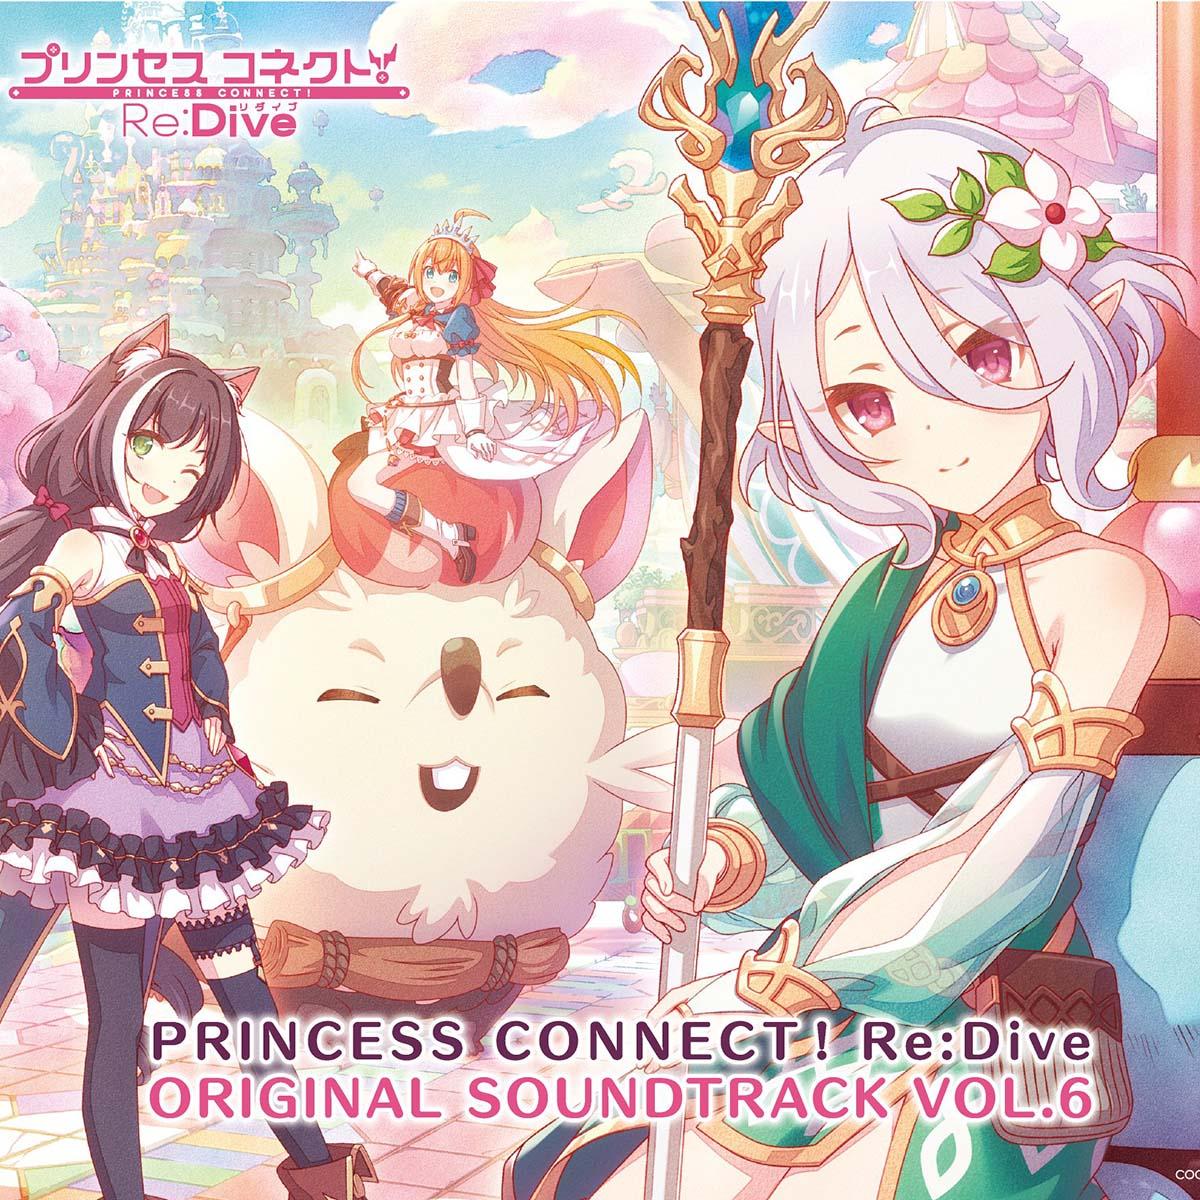 Princess Connect! Re:Dive Original Soundtrack Vol.6